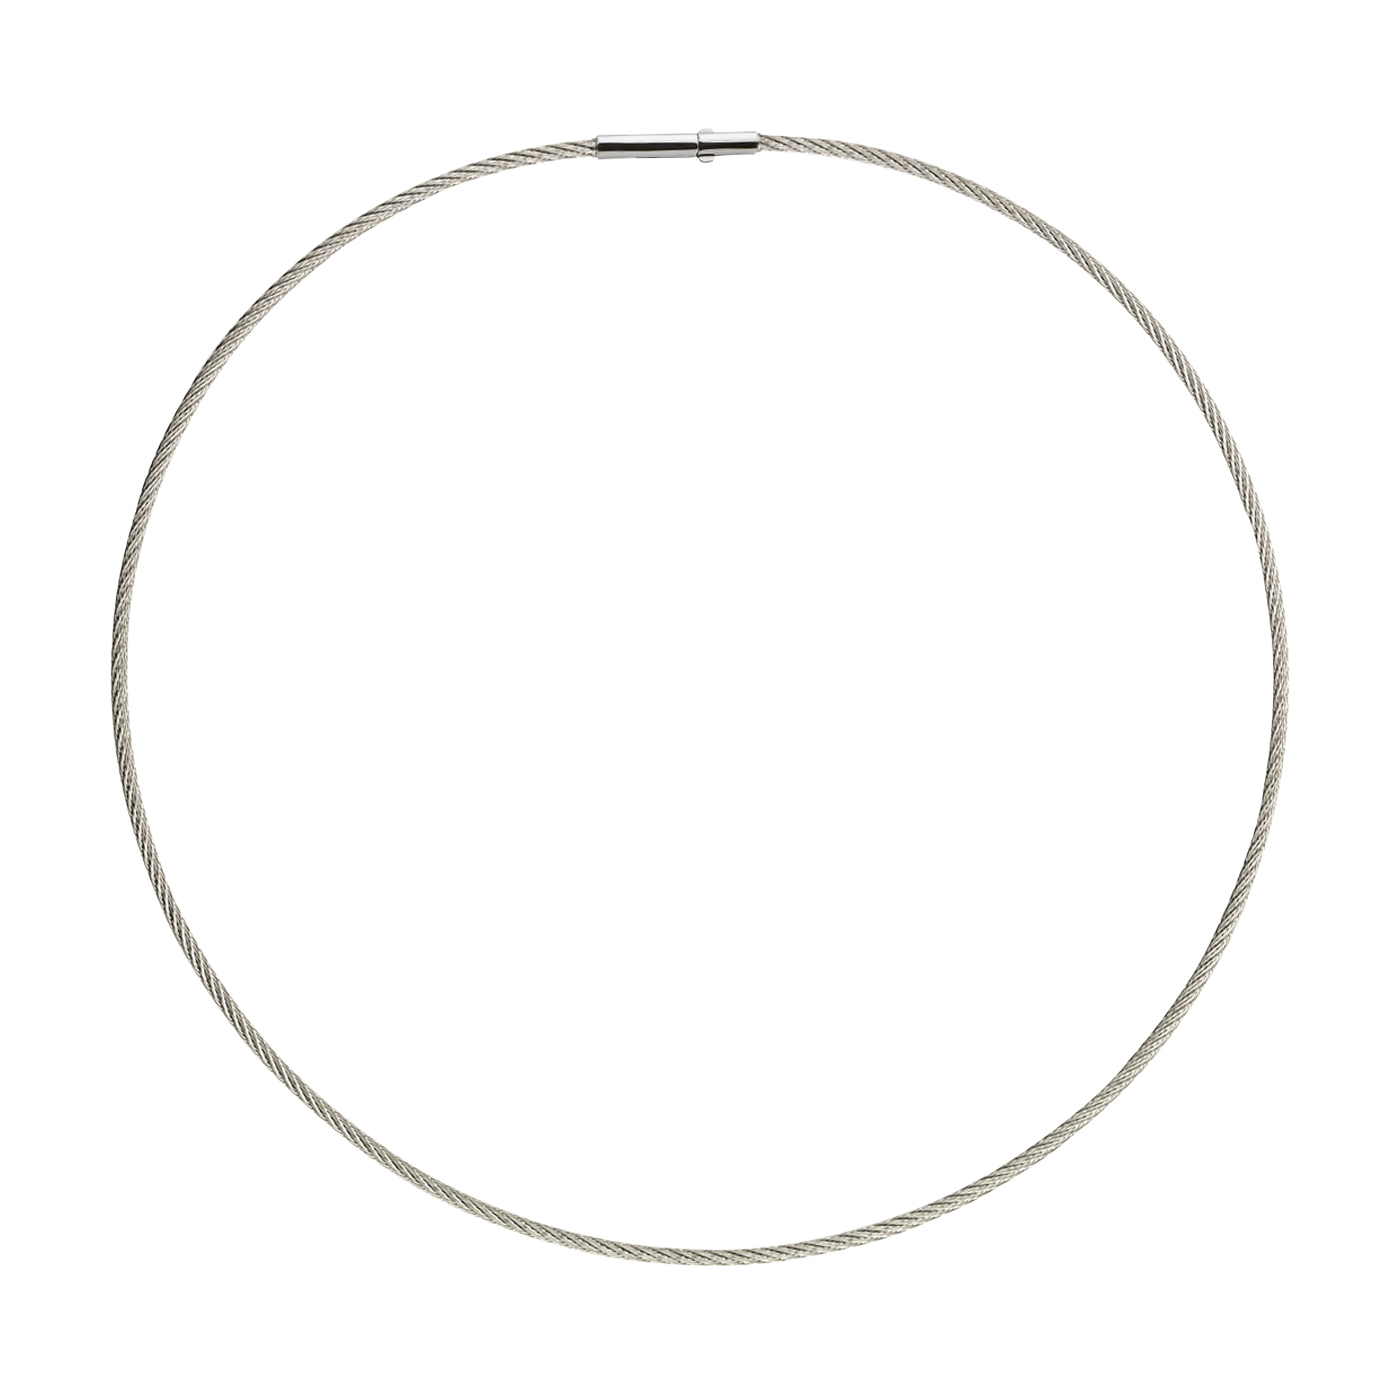 Rope Necklace, 1 Row, Double Clip Closure, ø 1.05 mm,42 cm - 1 piece